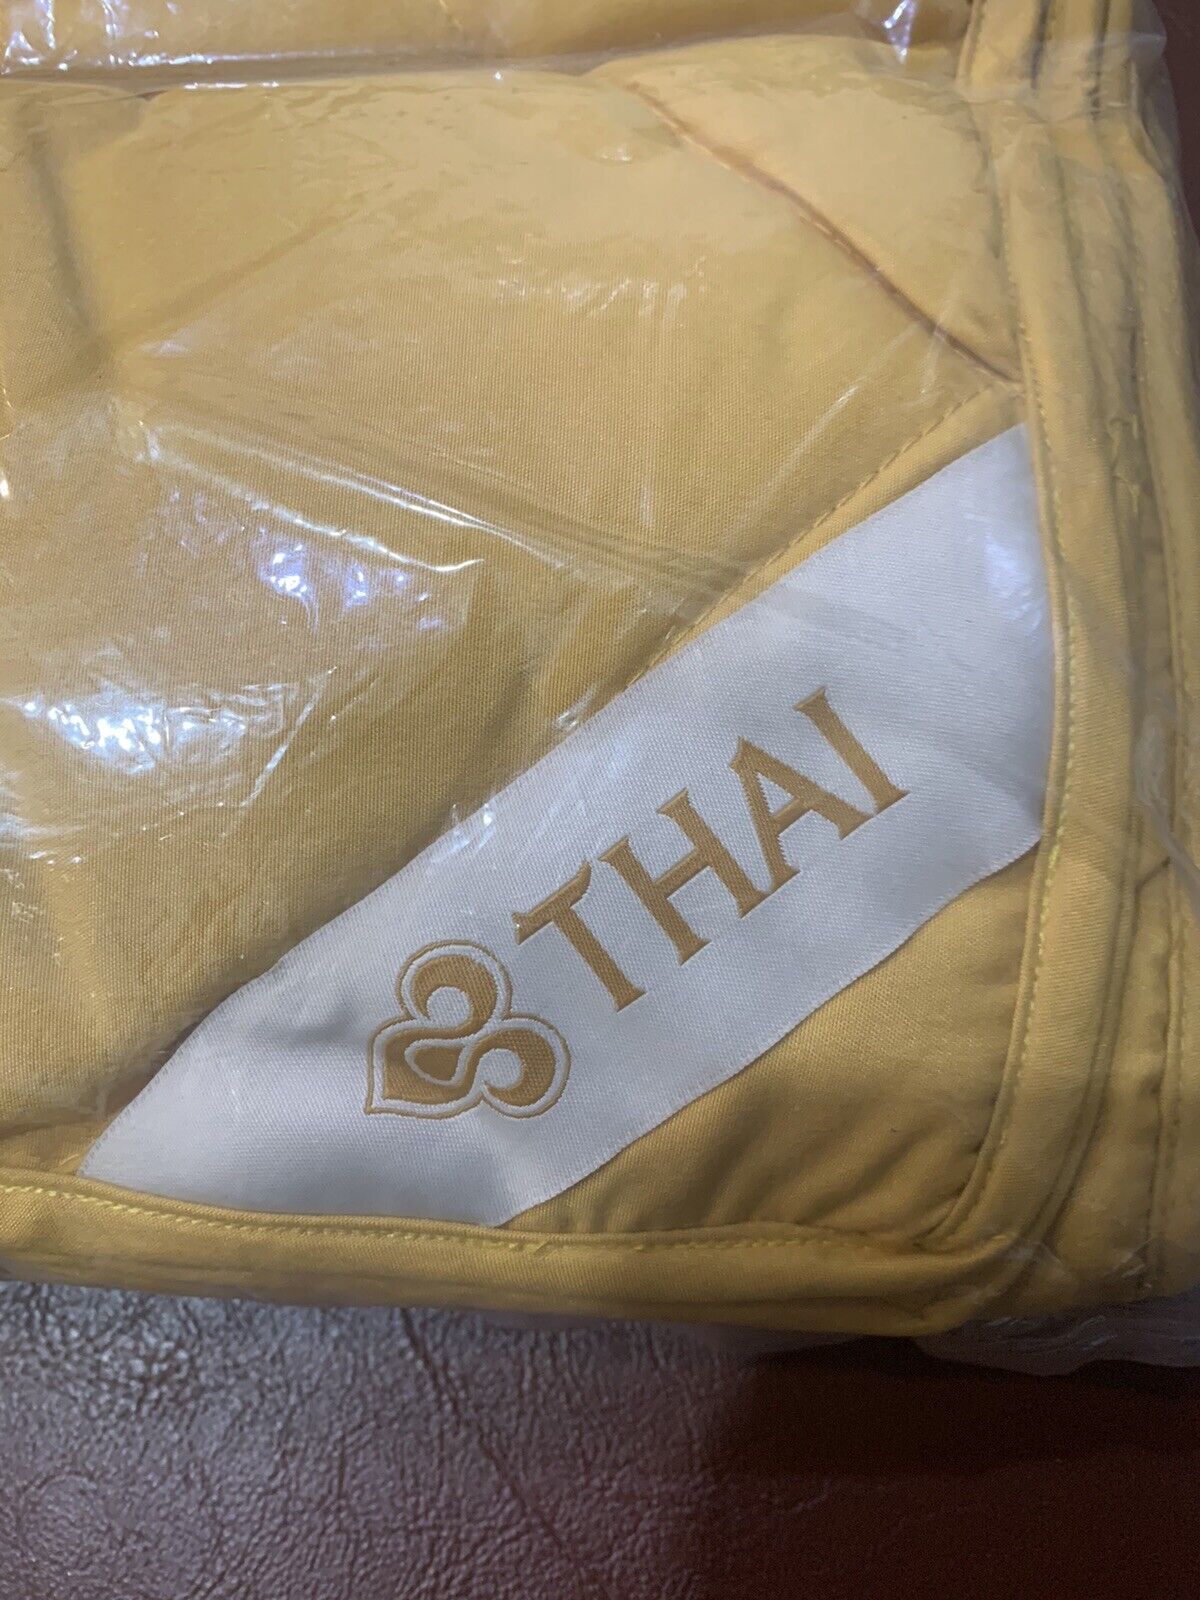 New Original Thai Airways Royal First Class Blanket - 